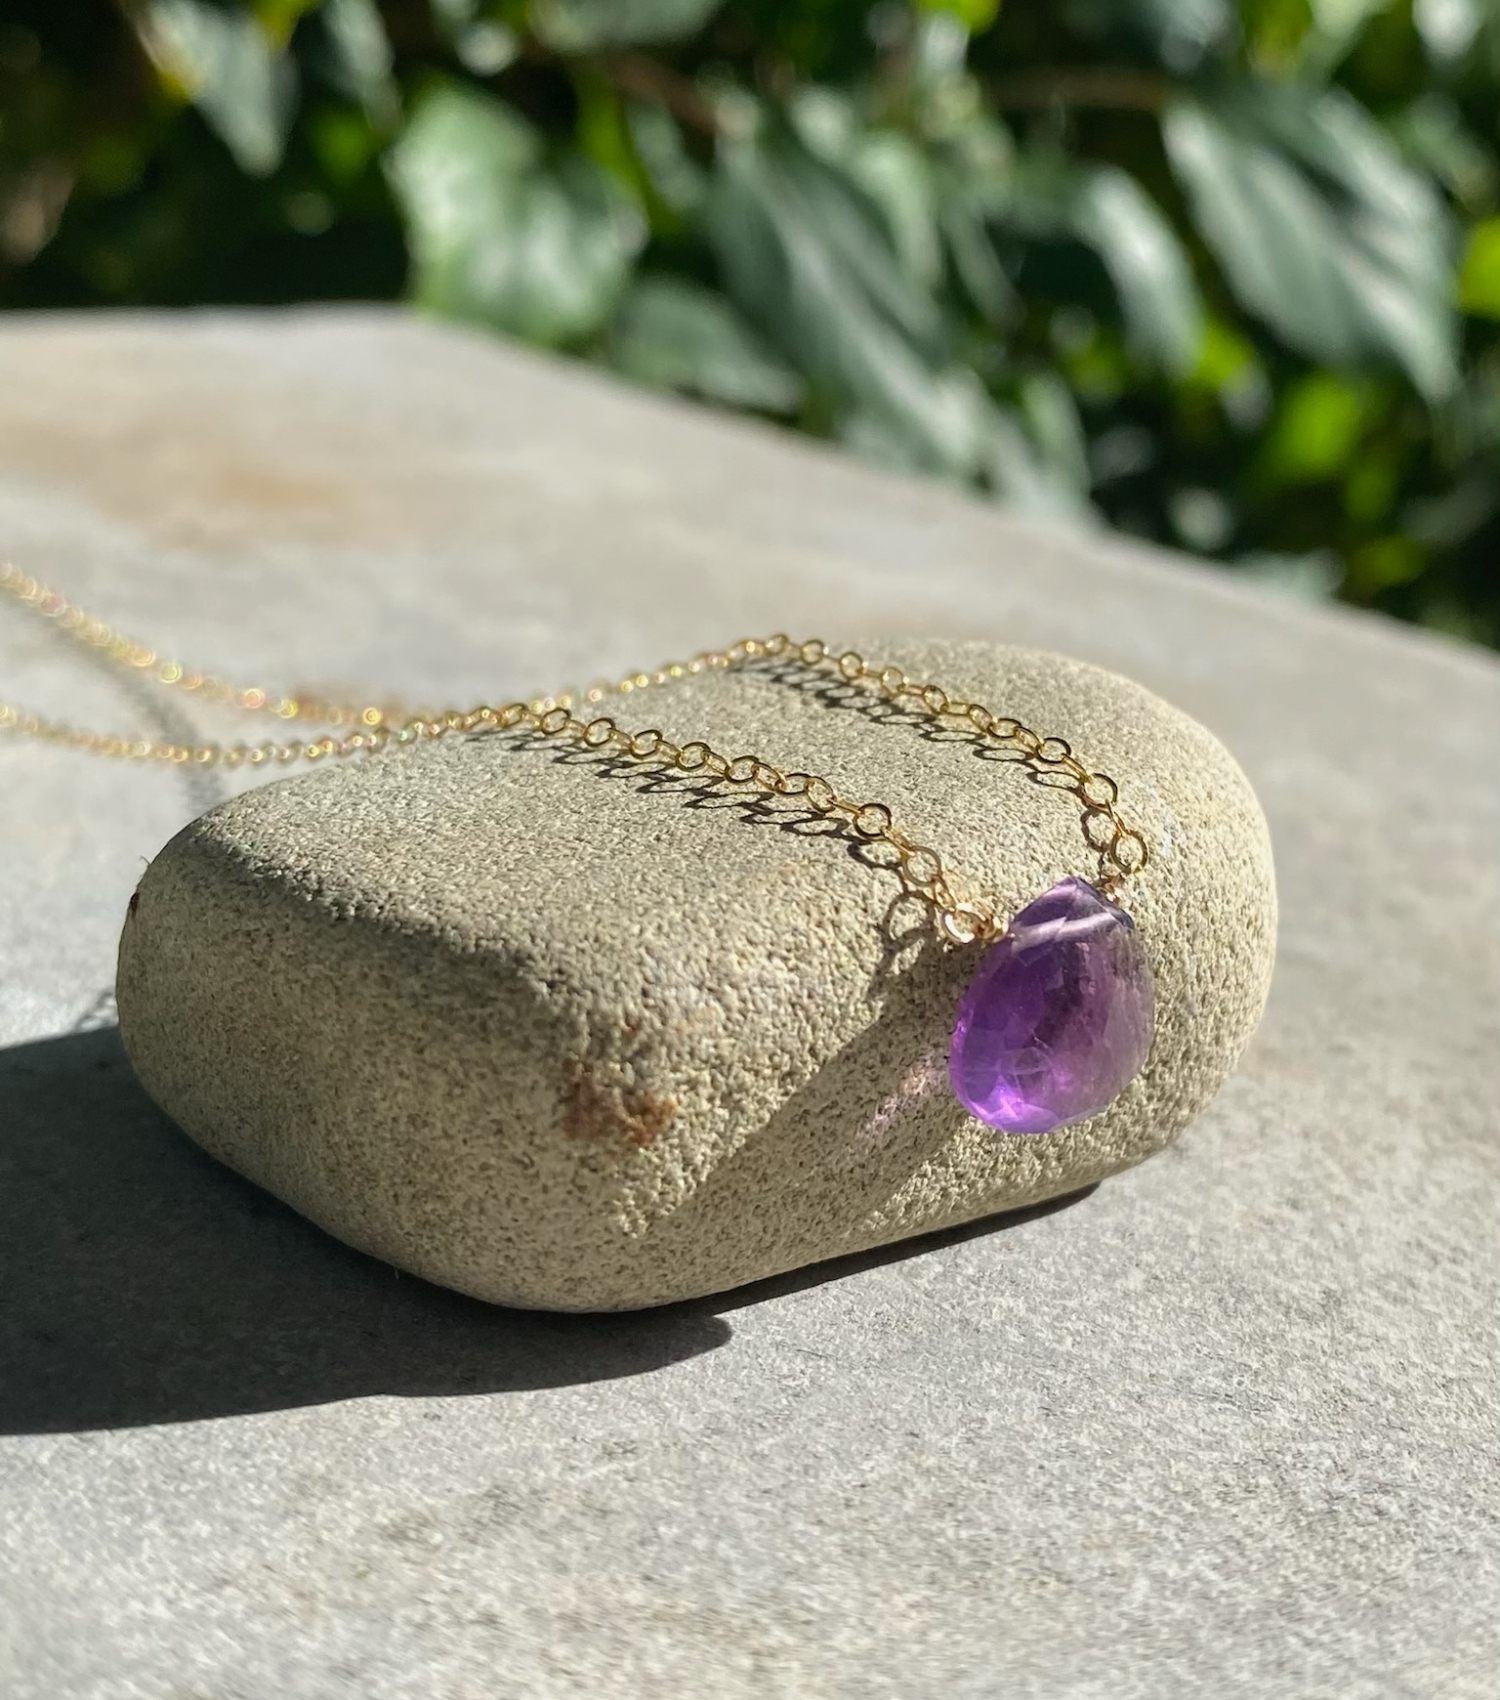 Purple Gemstones